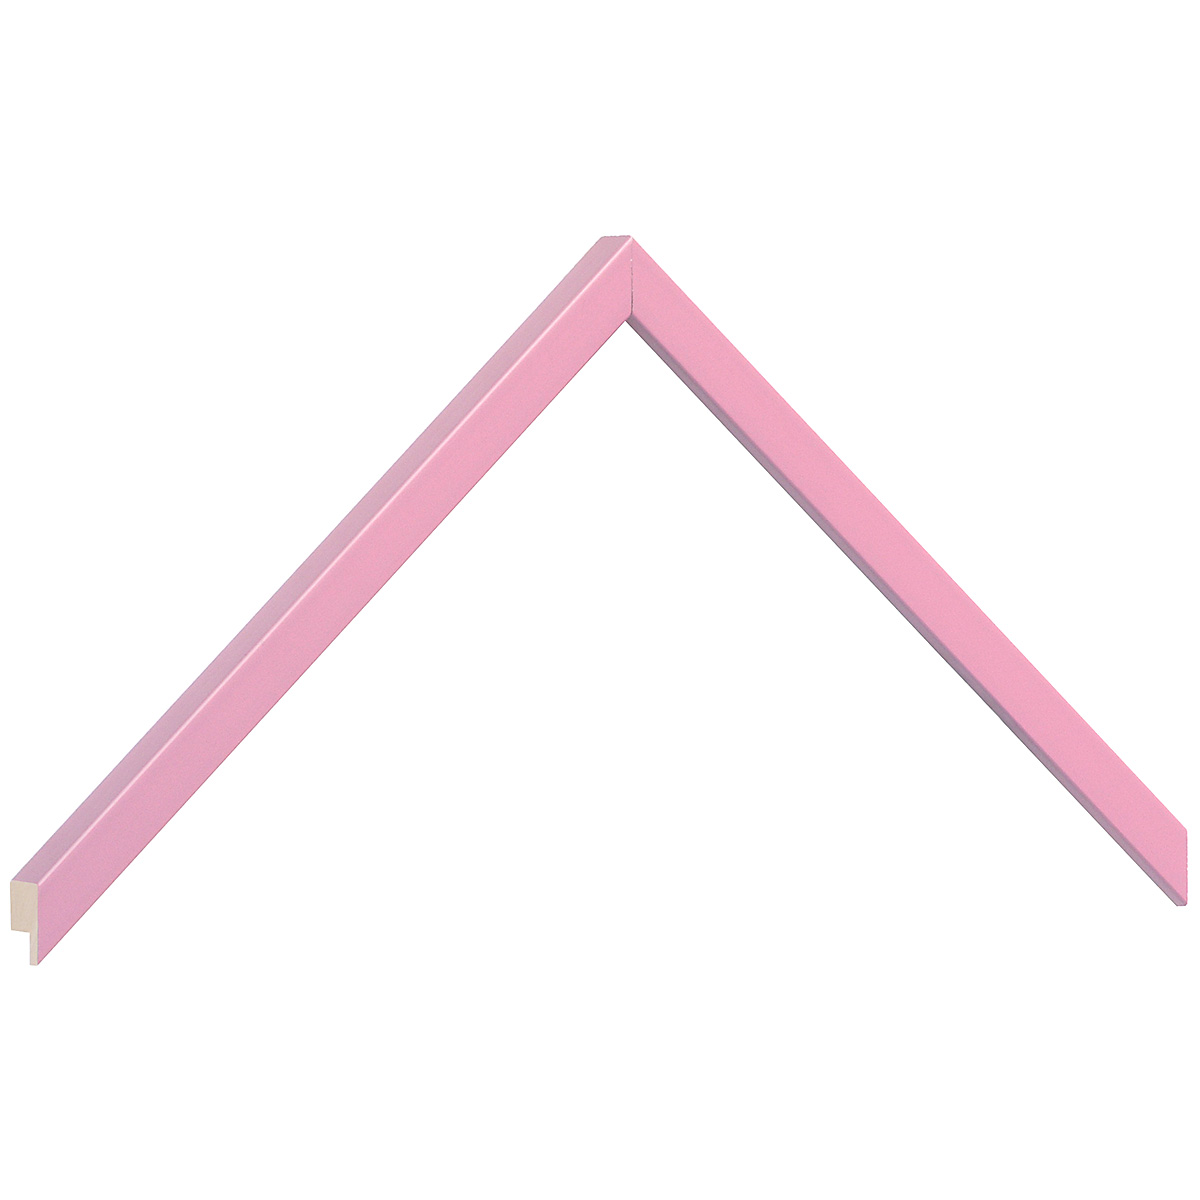 Asta in ramino piatta mm 10 - finitura opaca - color rosa - Campione